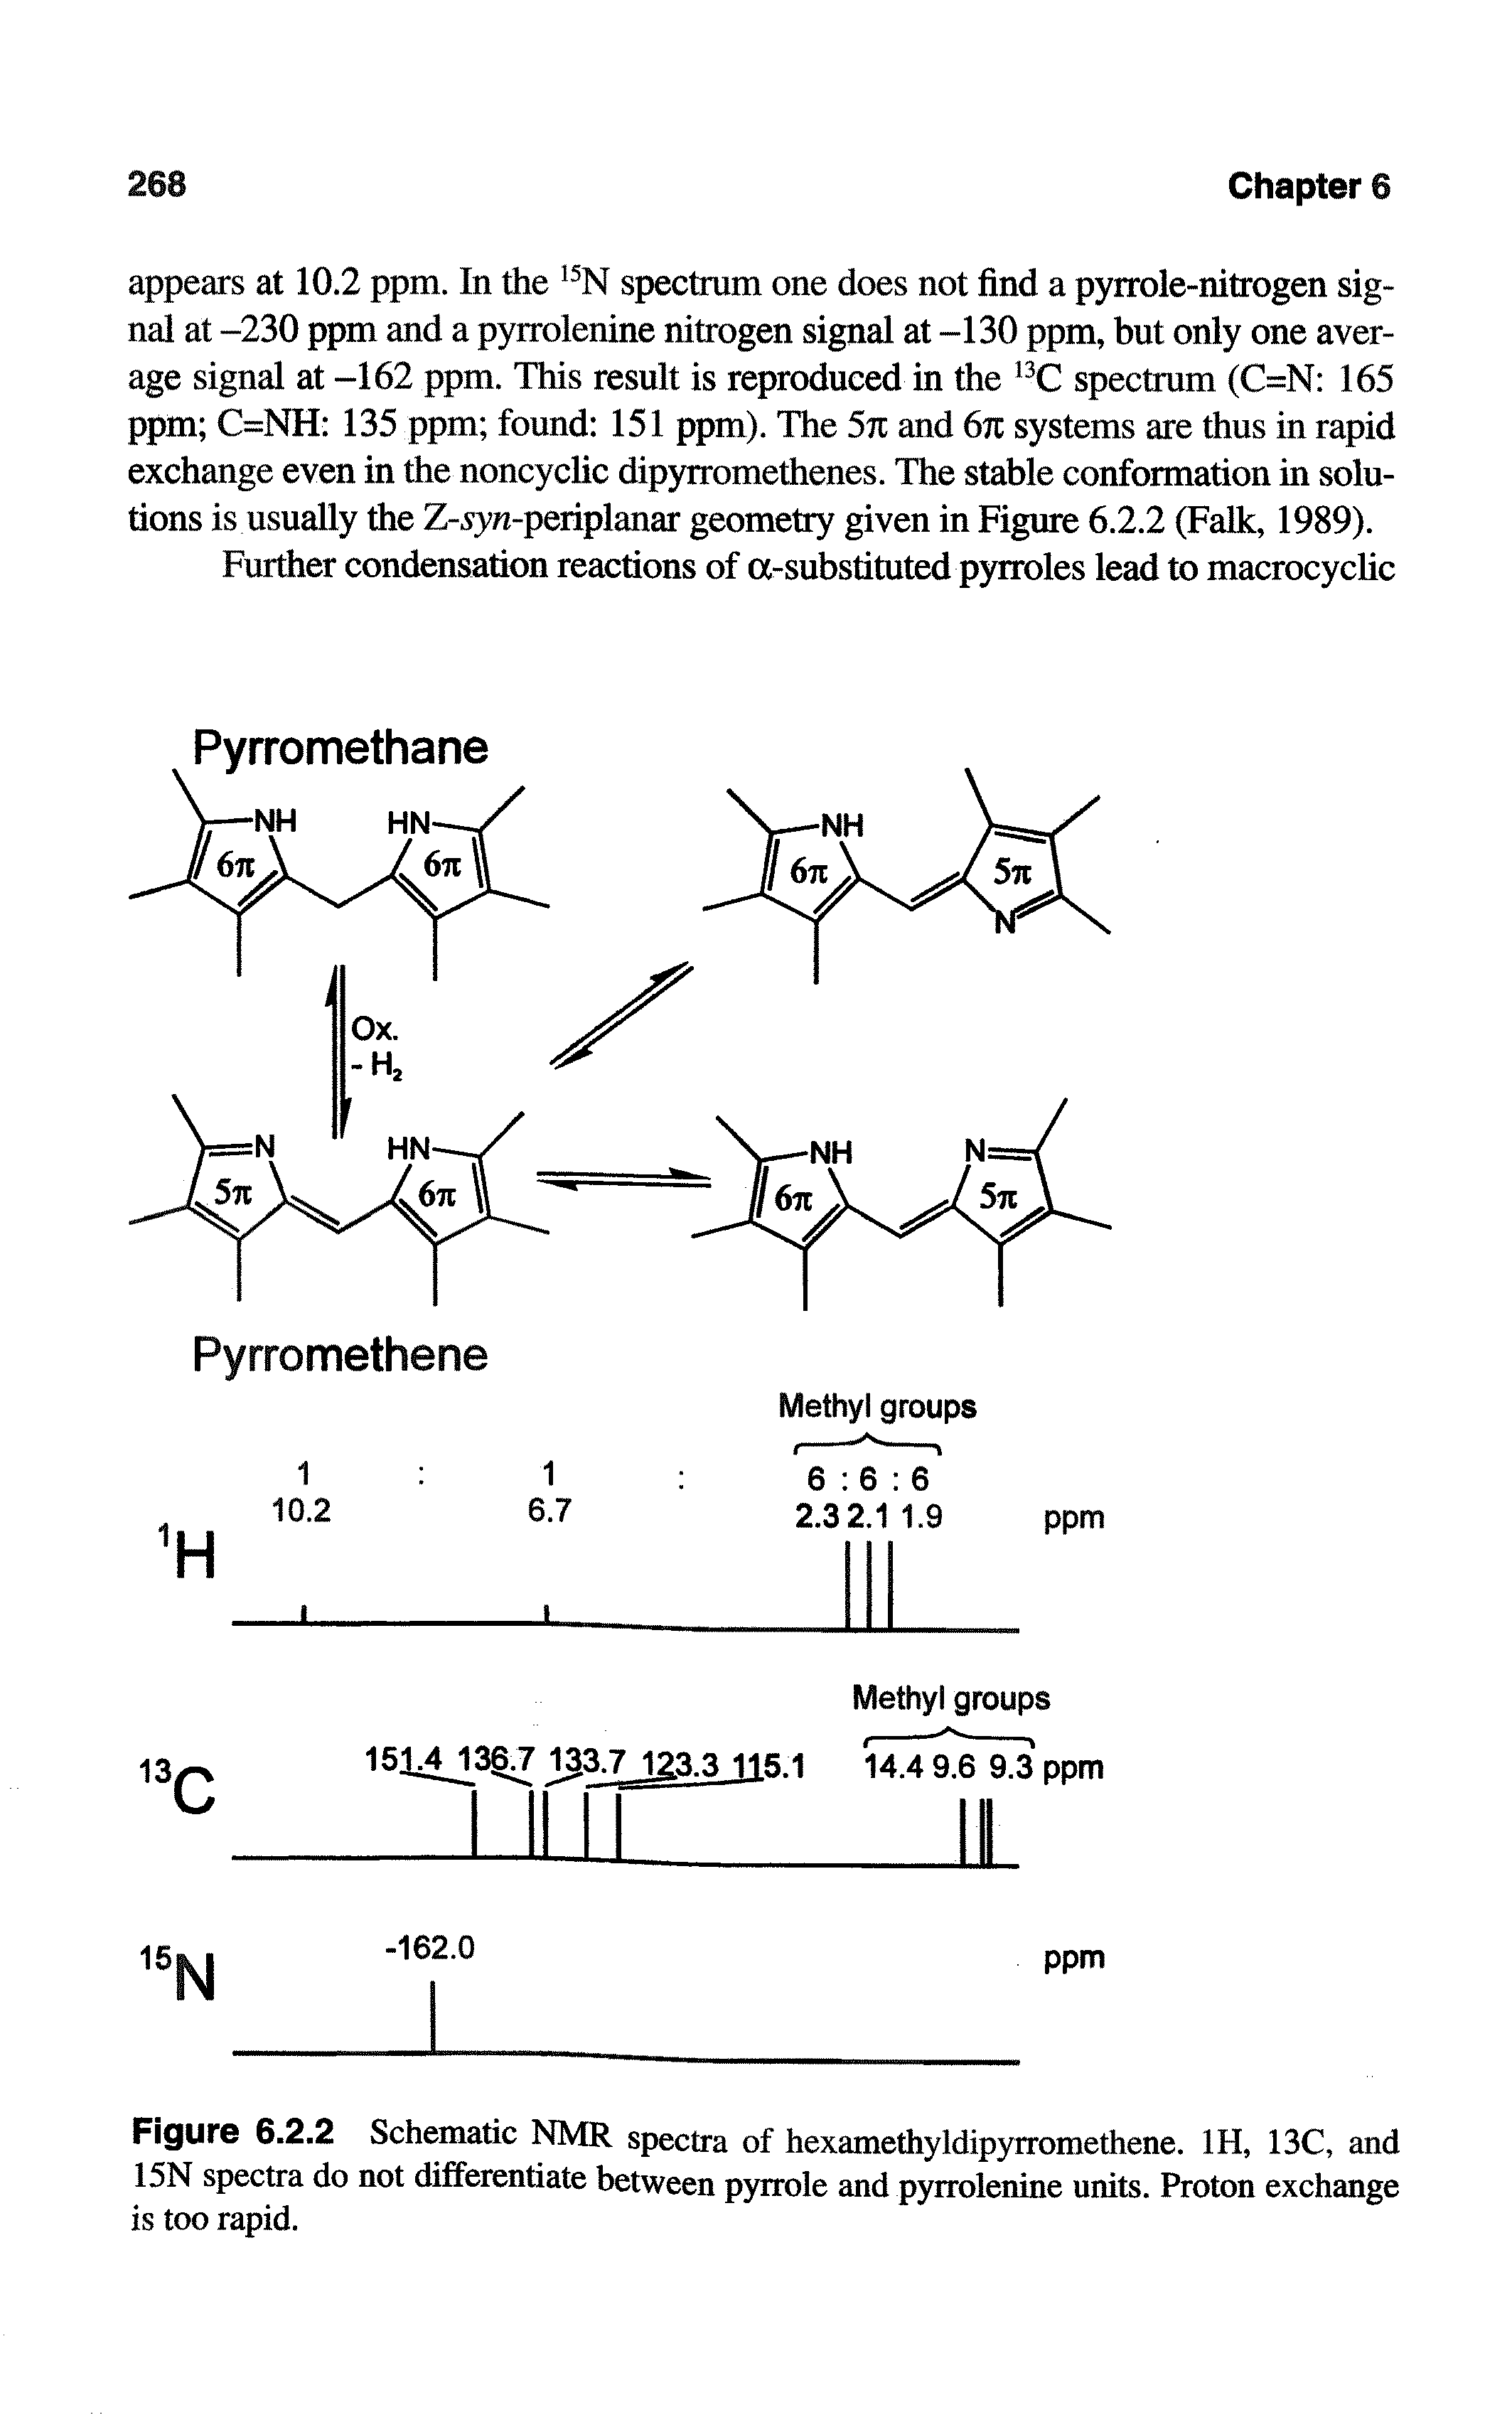 Figure 6.2.2 Schematic NMR spectra of hexamethyldipyrromethene. IH, 13C, and 15N spectra do not differentiate between pyrrole and pyrrolenine units. Proton exchange is too rapid.